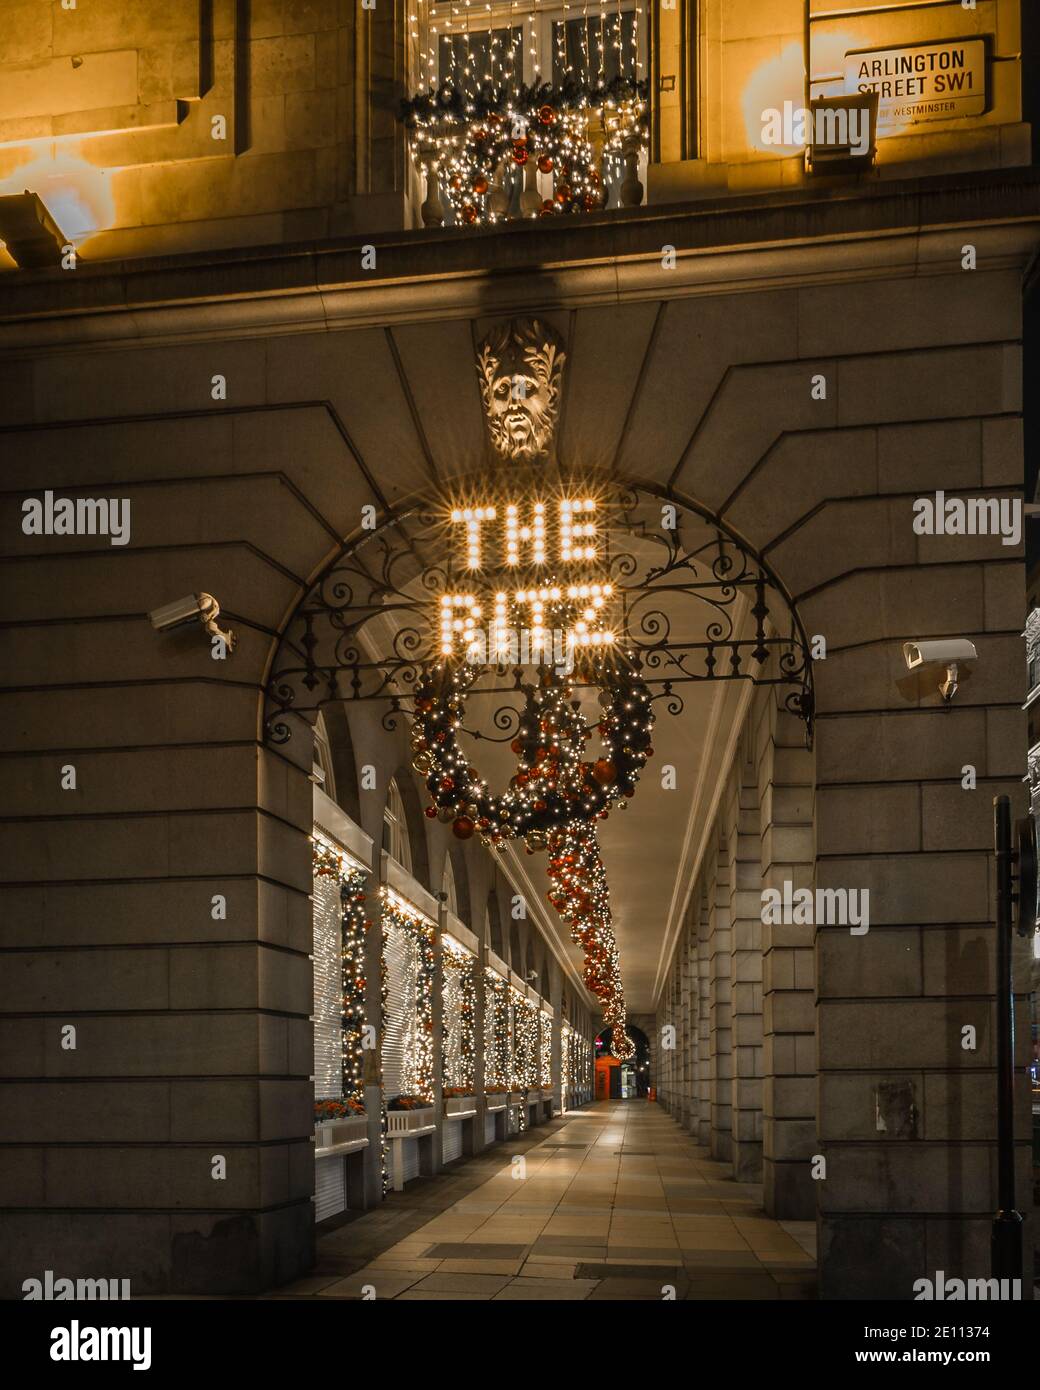 The Ritz Hotel in London. Stock Photo